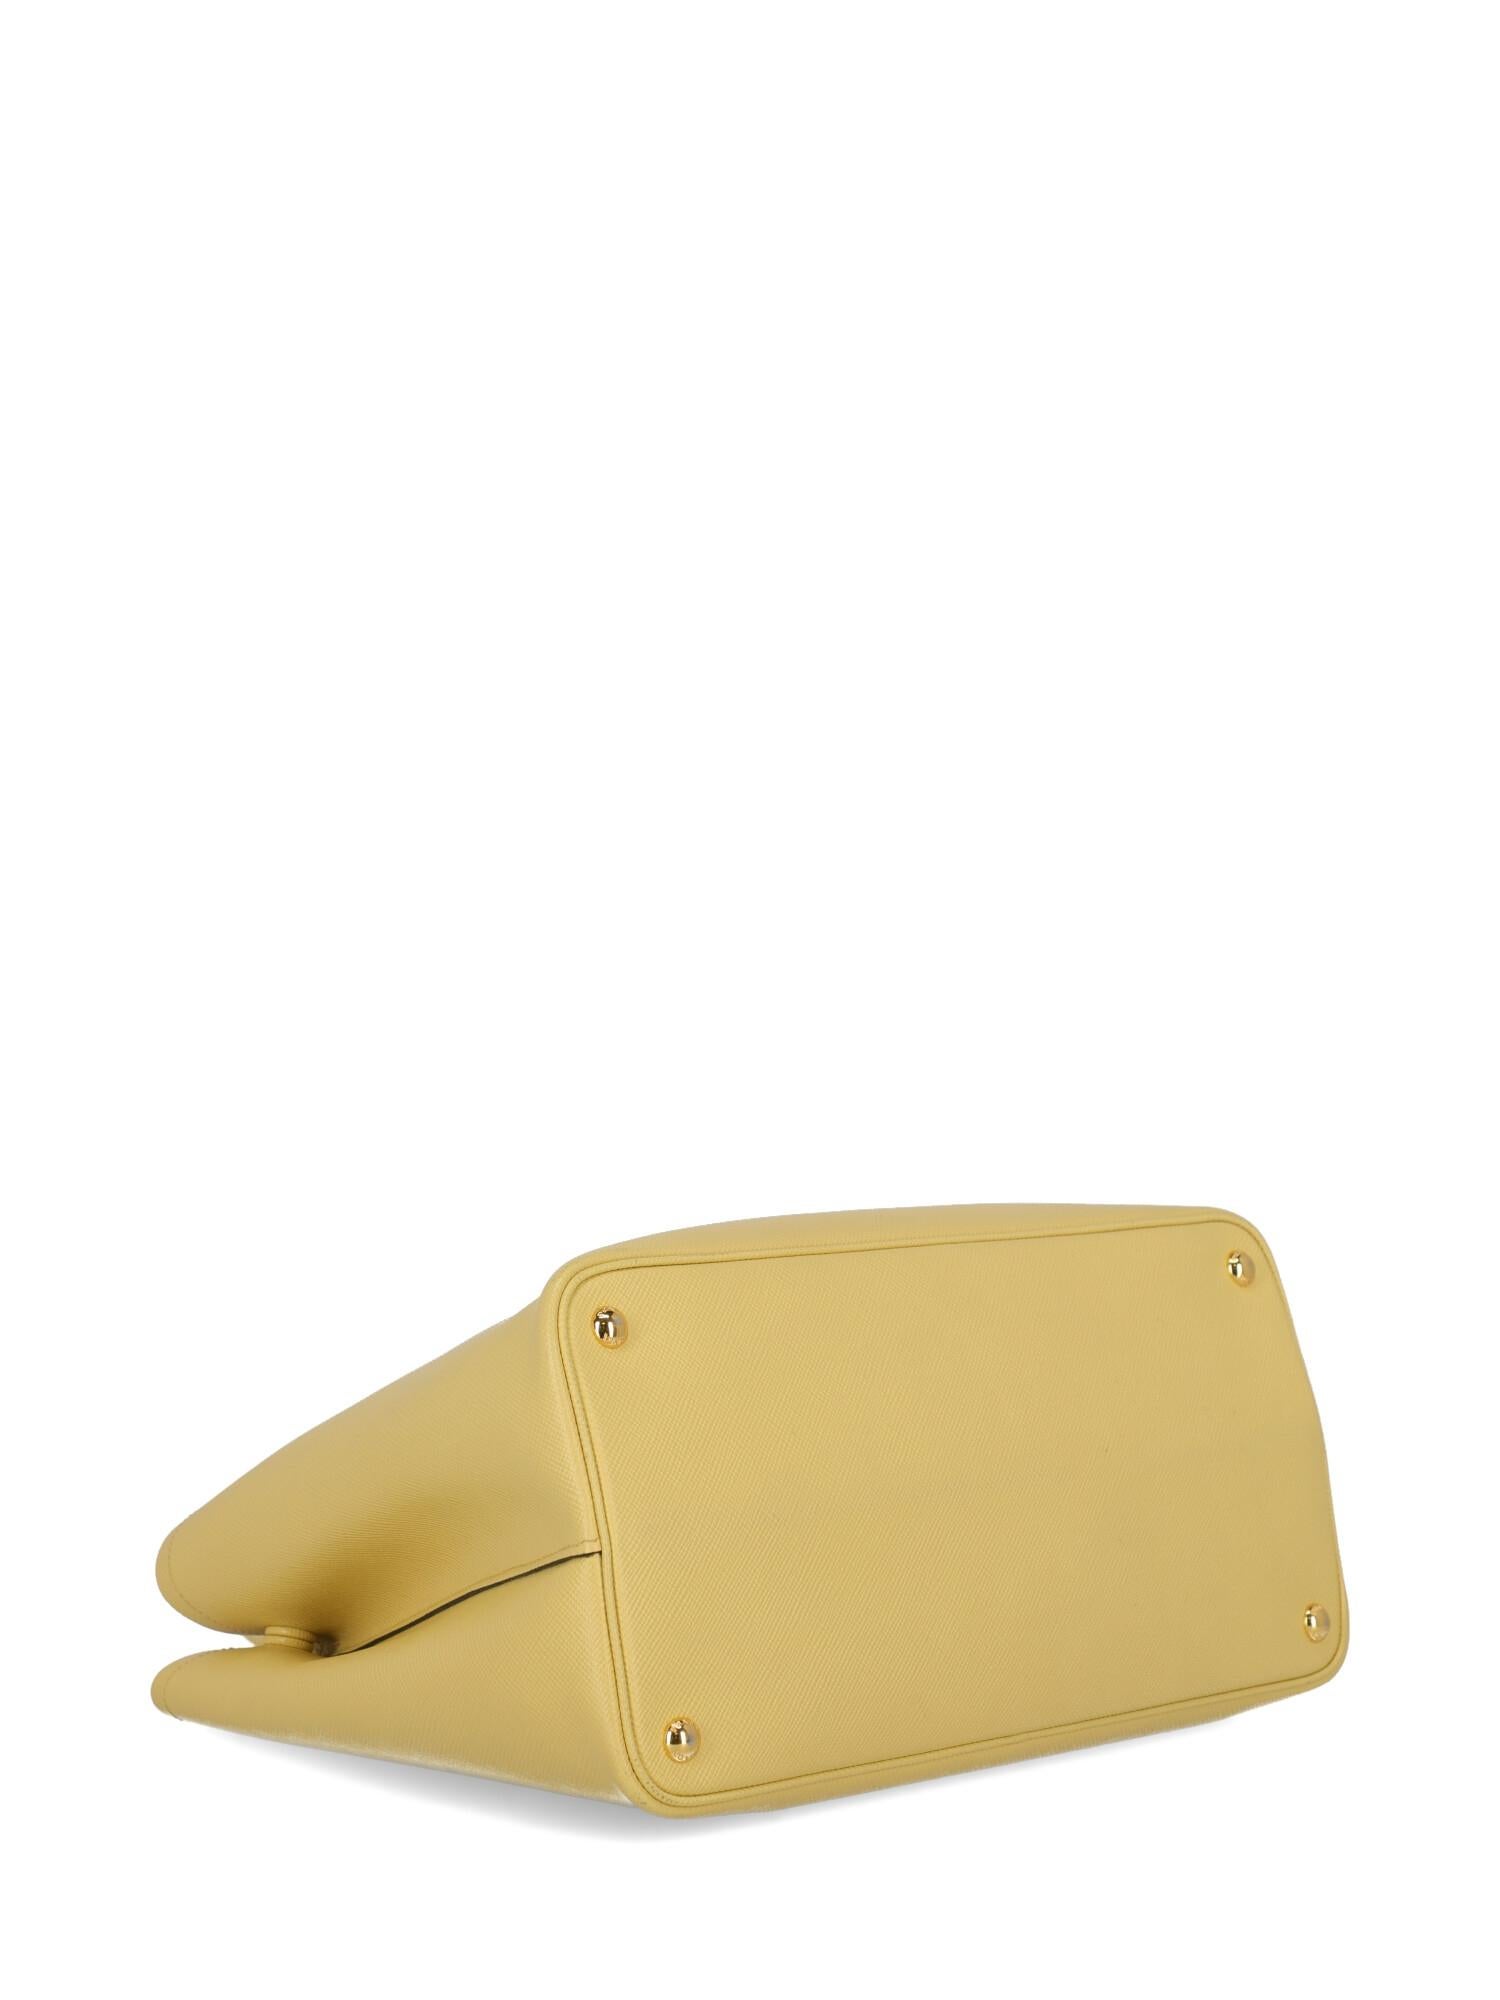 Prada Women's Handbag Double Yellow Leather 1